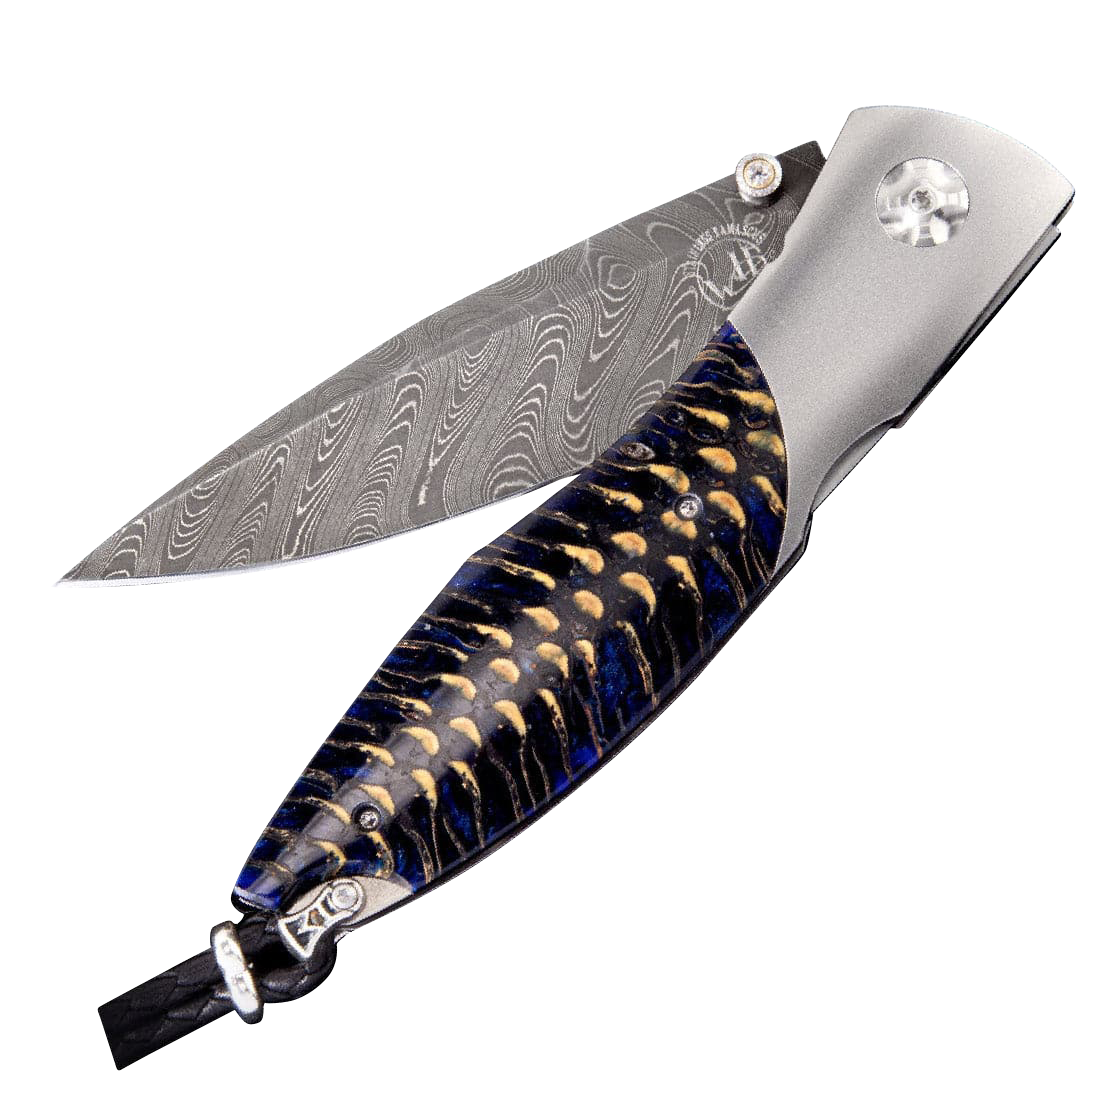 William Henry Omni Spruce Pocket Knife